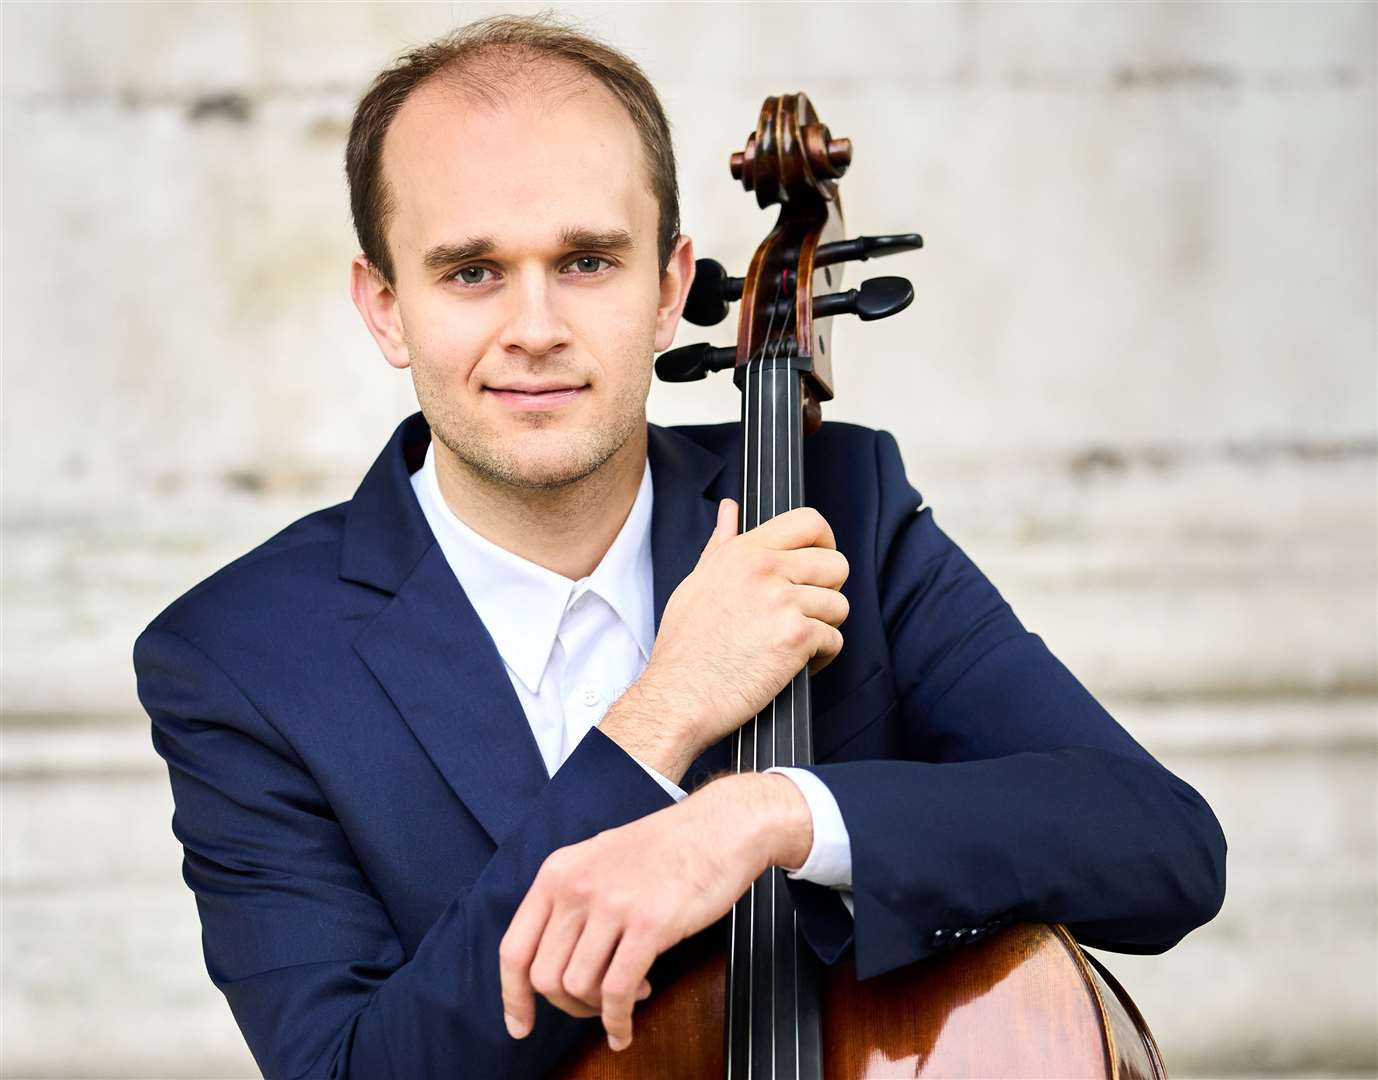 Cellist Maciej Kułakowski will perform a classical music concert at Godinton House, near Ashford, this winter. Picture: Kaupo Kikkas